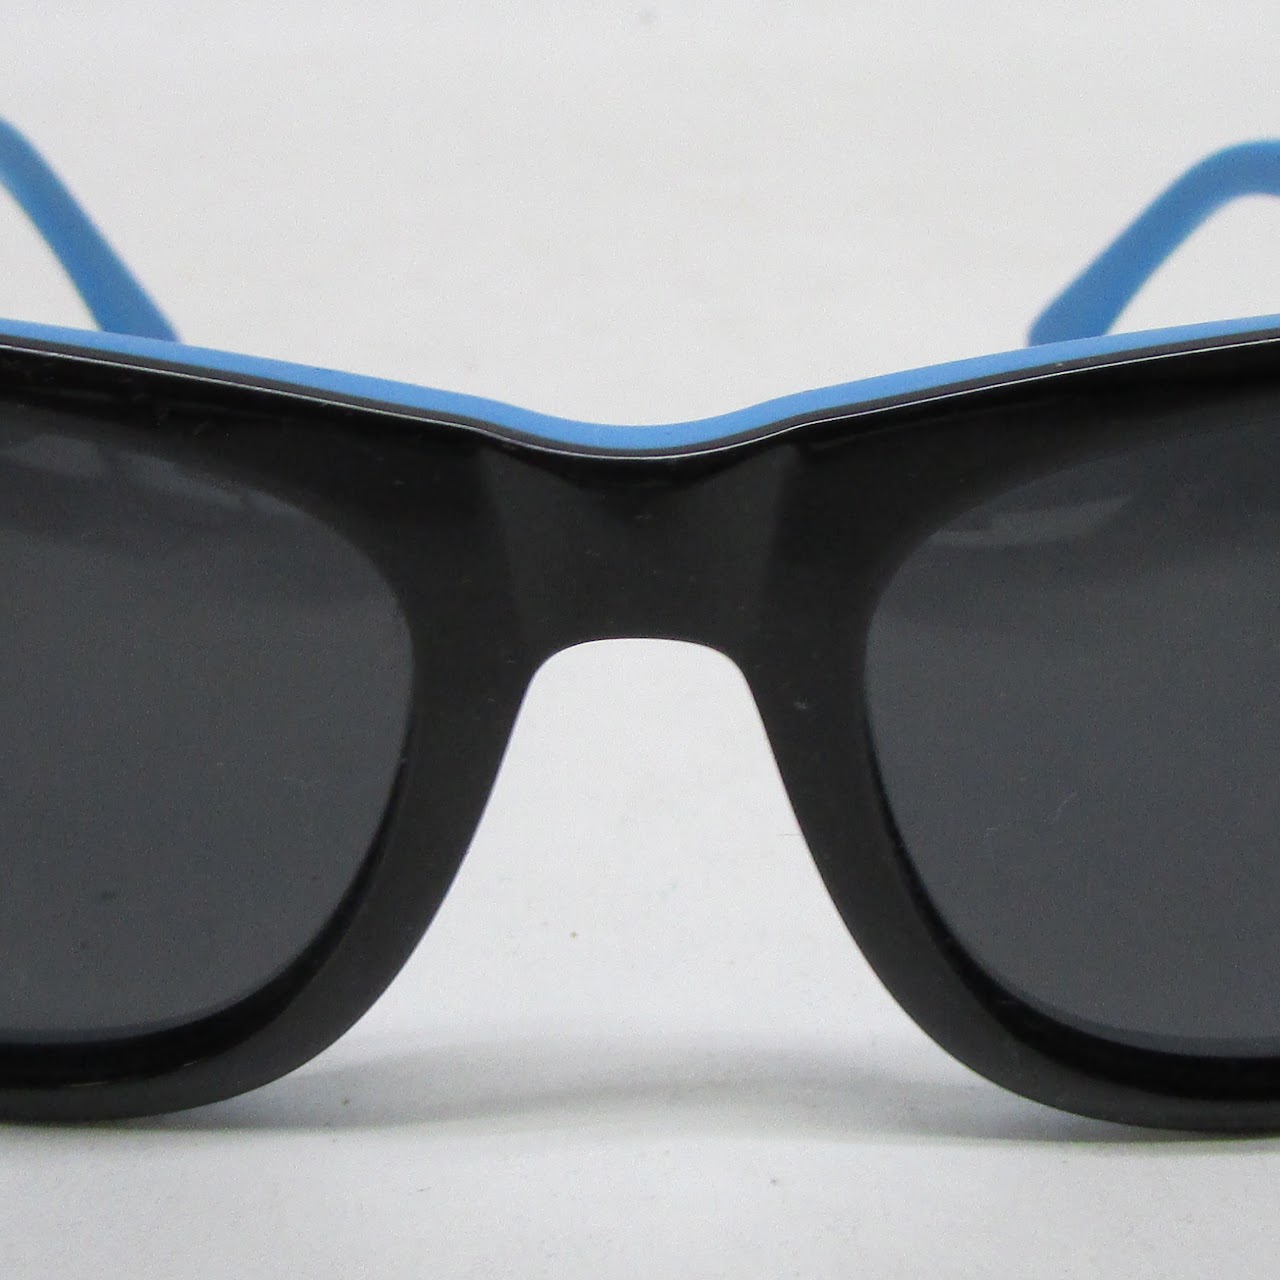 Tom Ford Leo Sunglasses